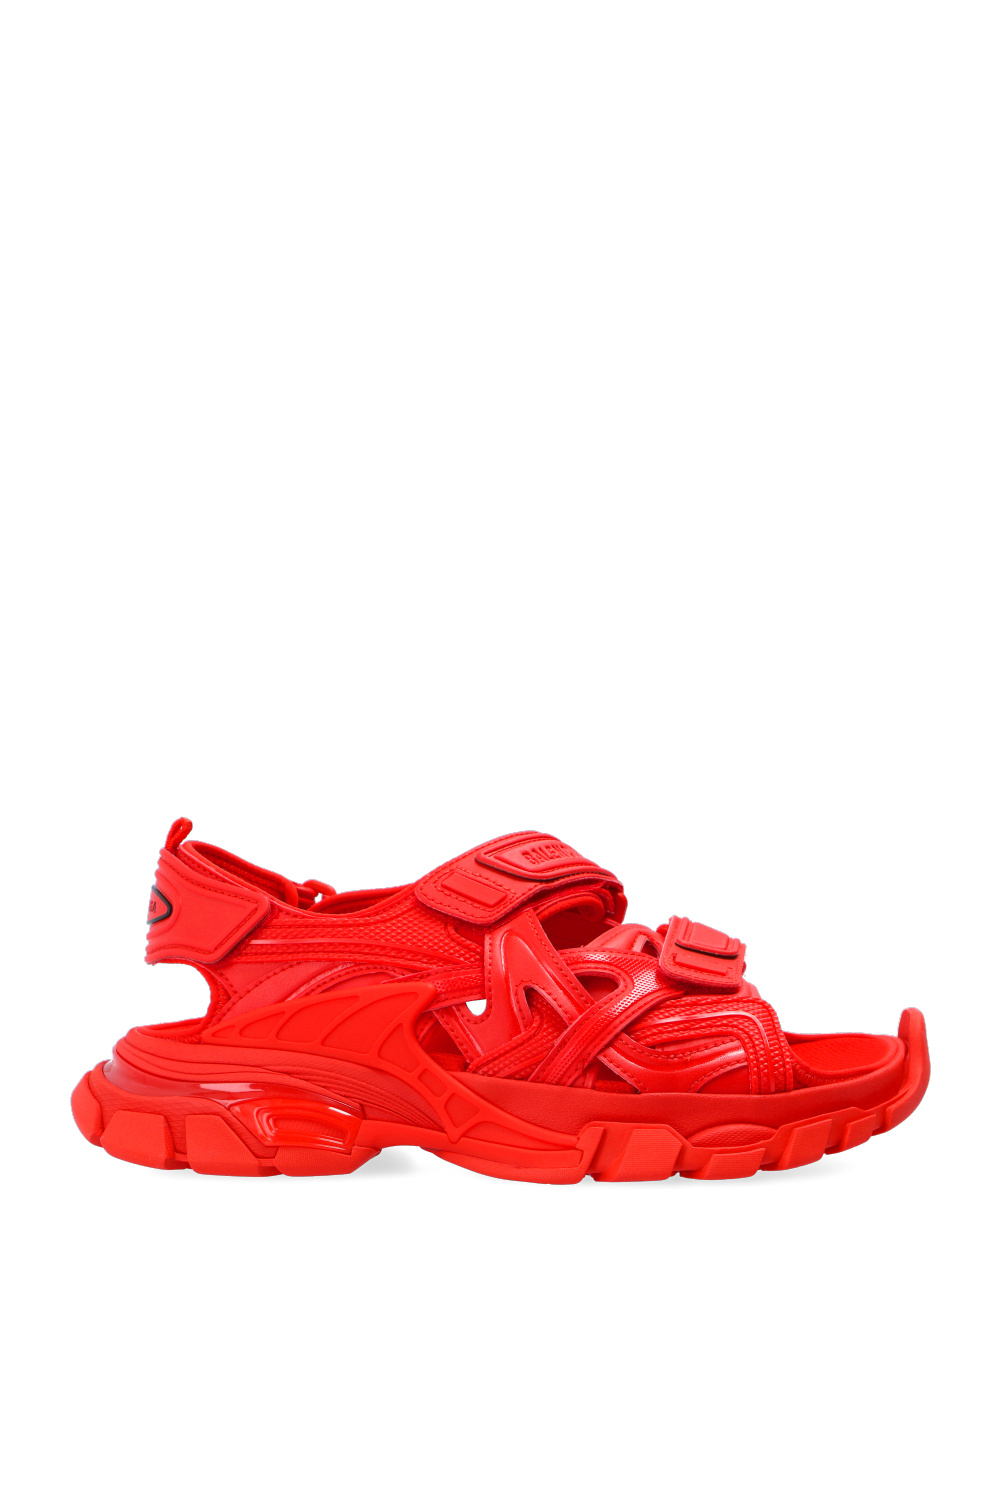 Track sandal Balenciaga Red size 38 EU in Rubber - 22439029